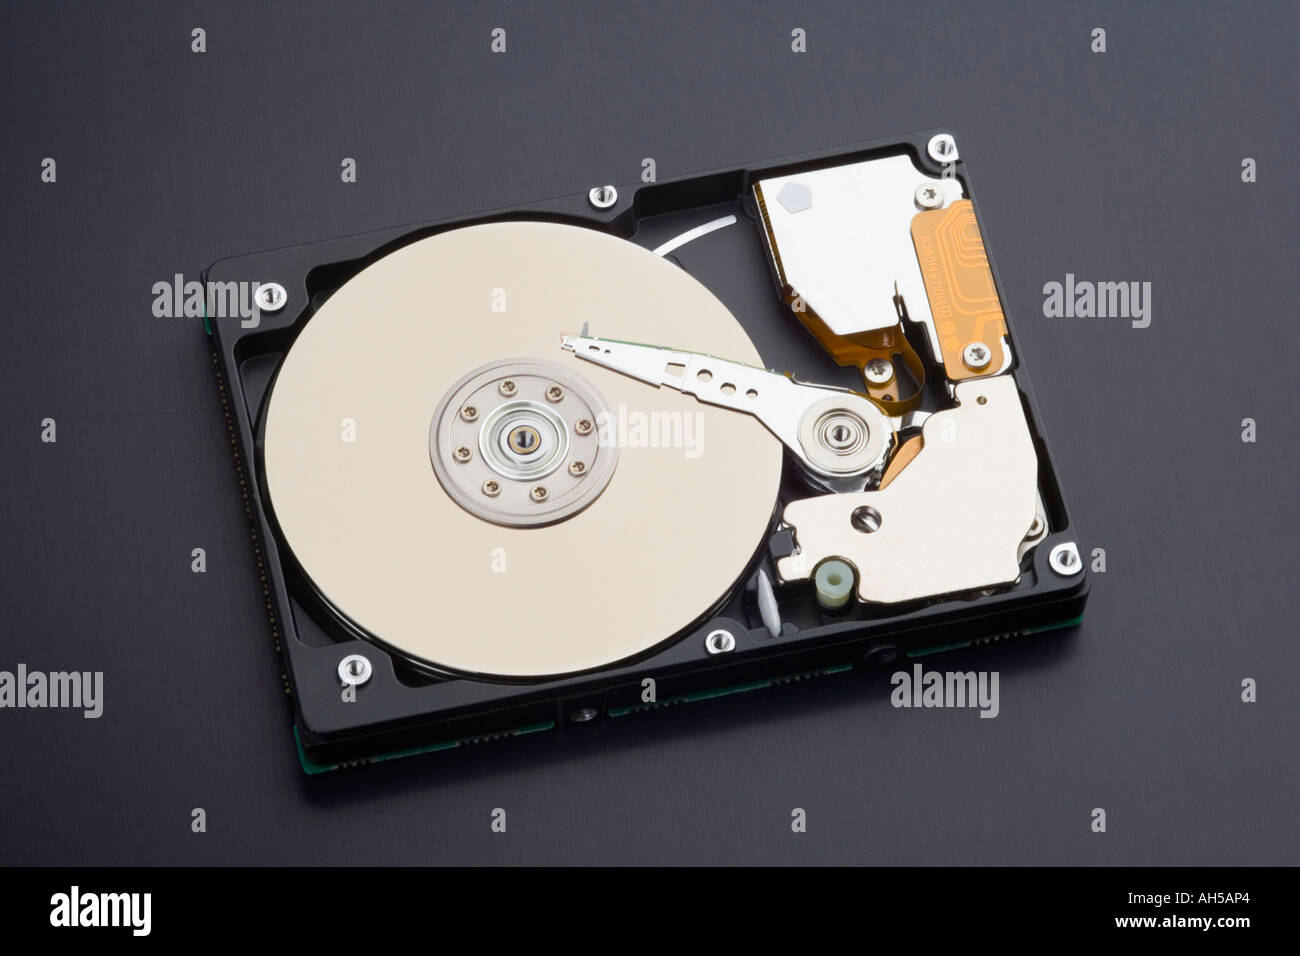 3.5 pollici hard disk drive Foto Stock